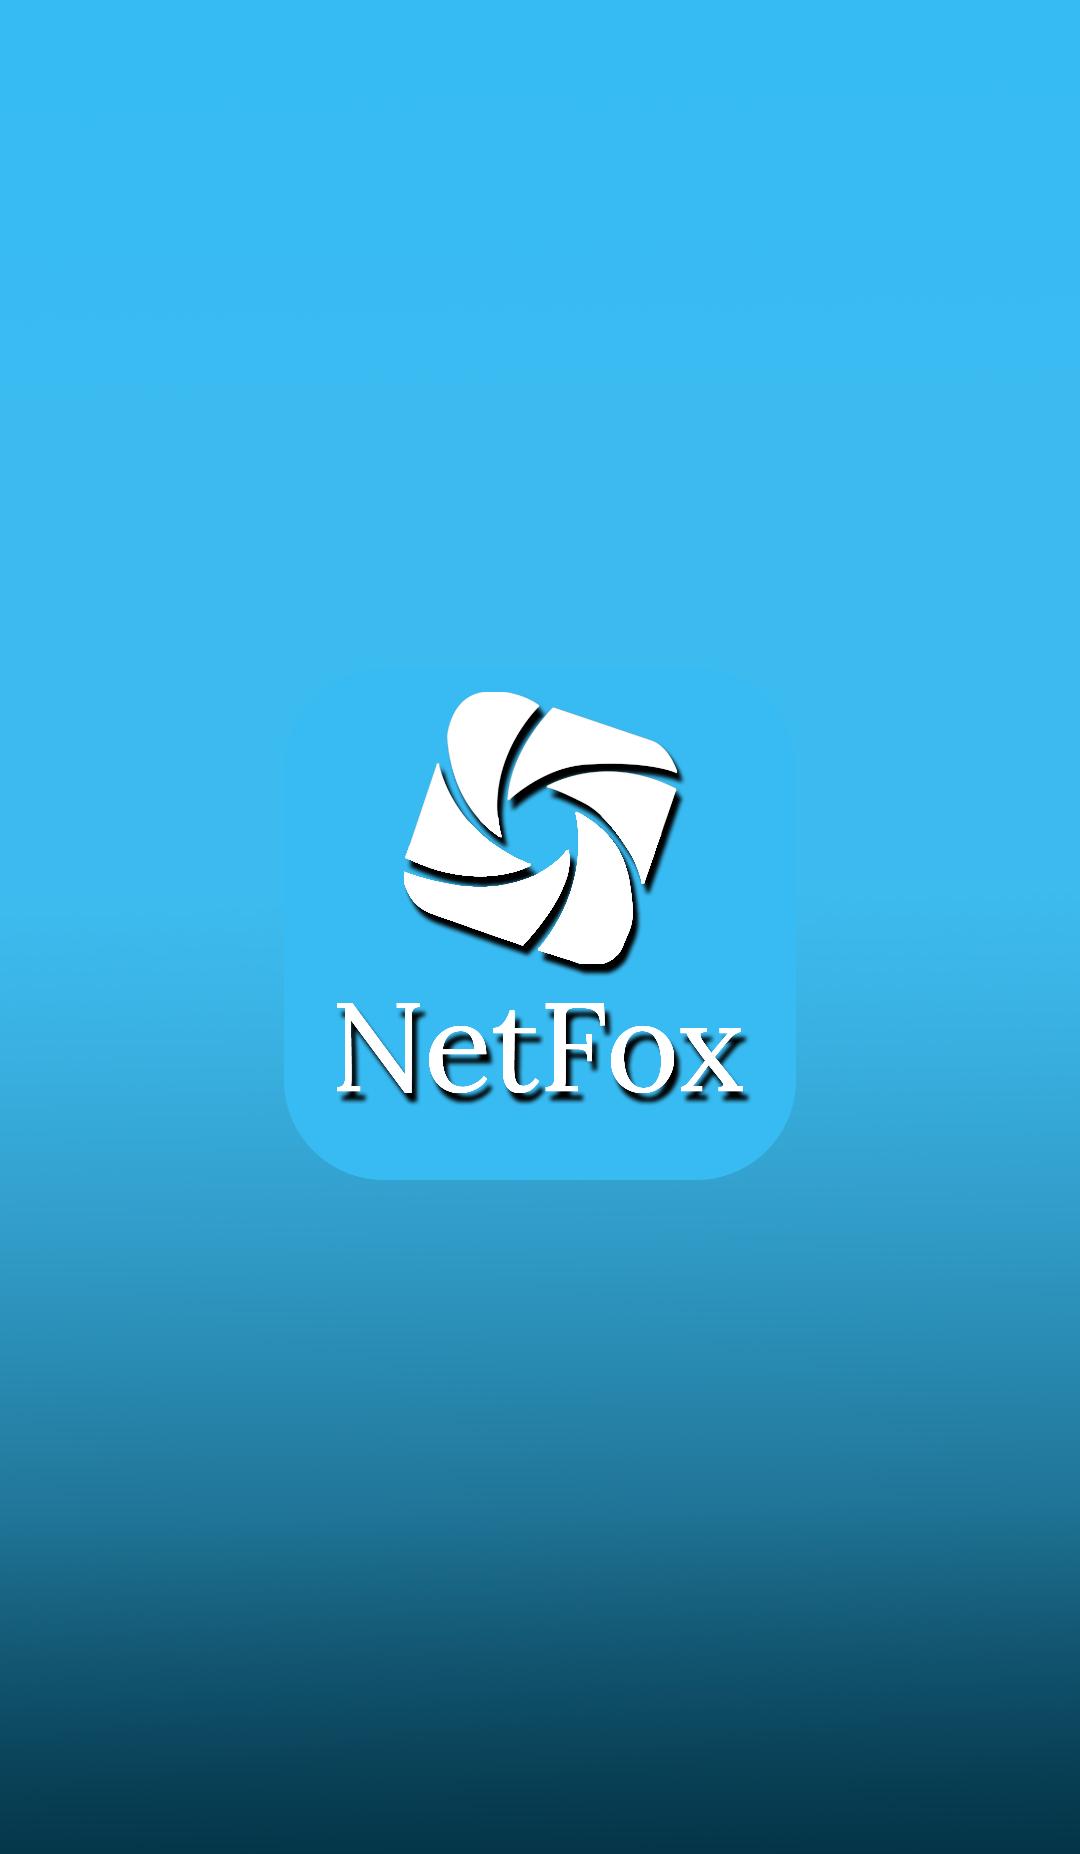 Netfox. Fox net ВК. Netfox logo. Fox net